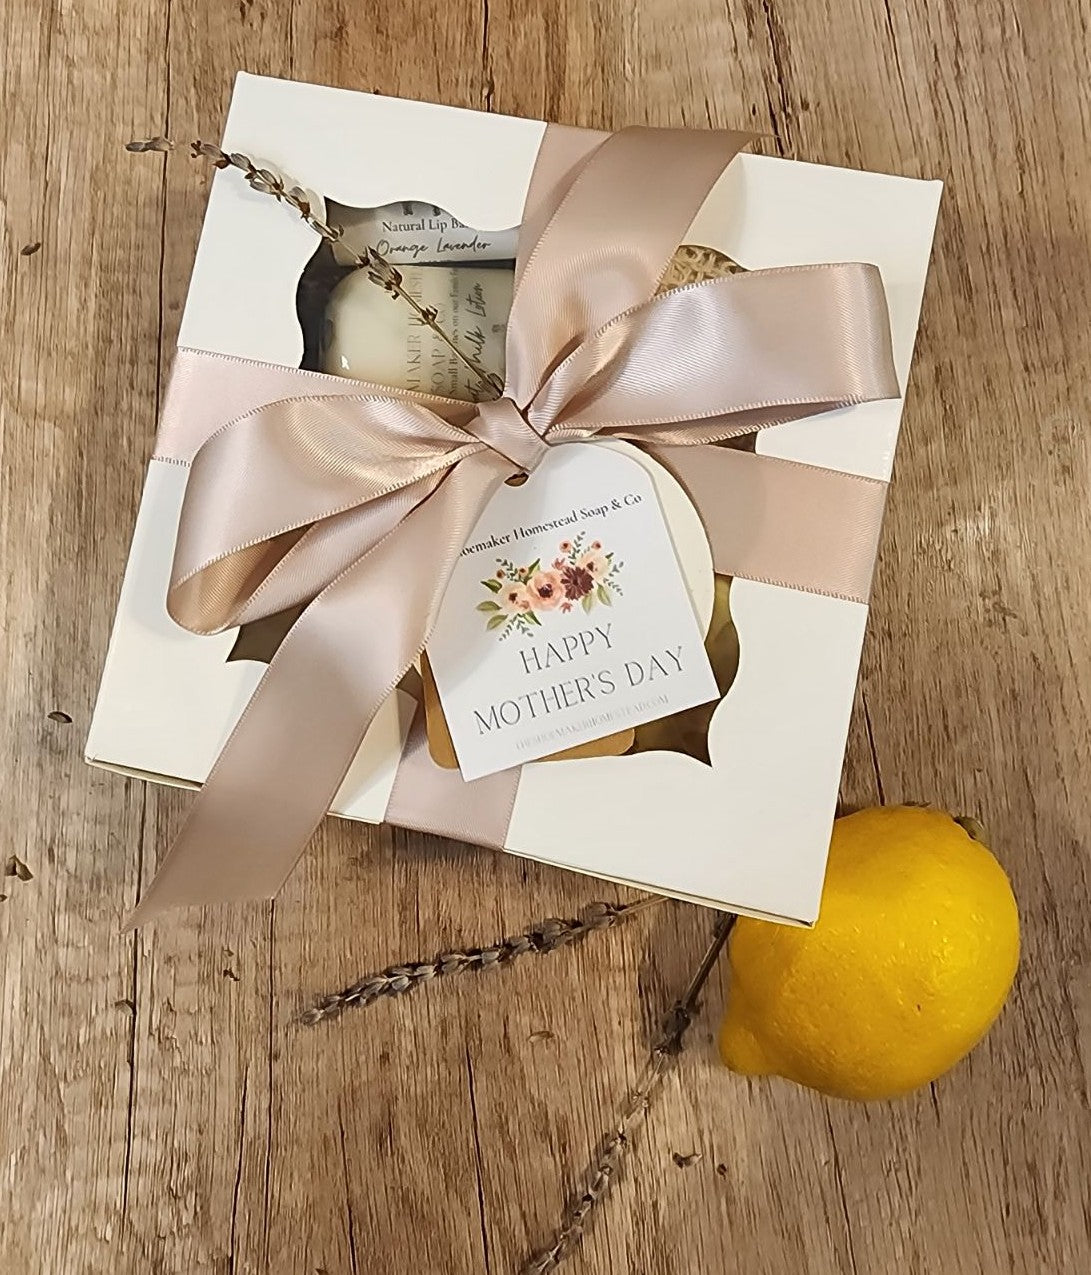 Lemon and Lavender Gift Box